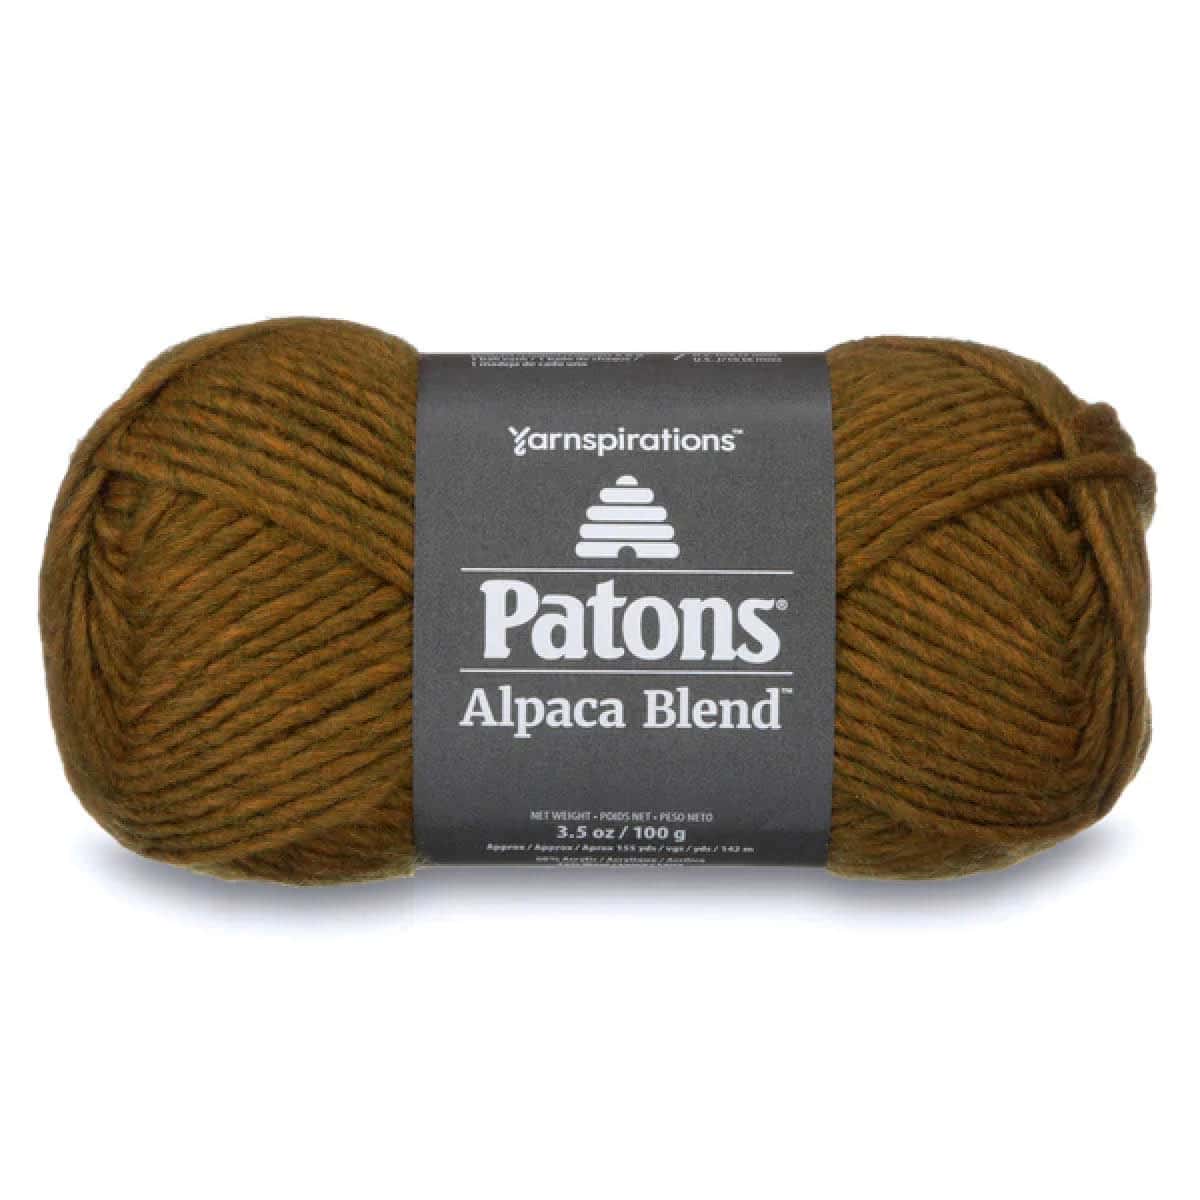 Patons Alpaca Blend Yarn Product